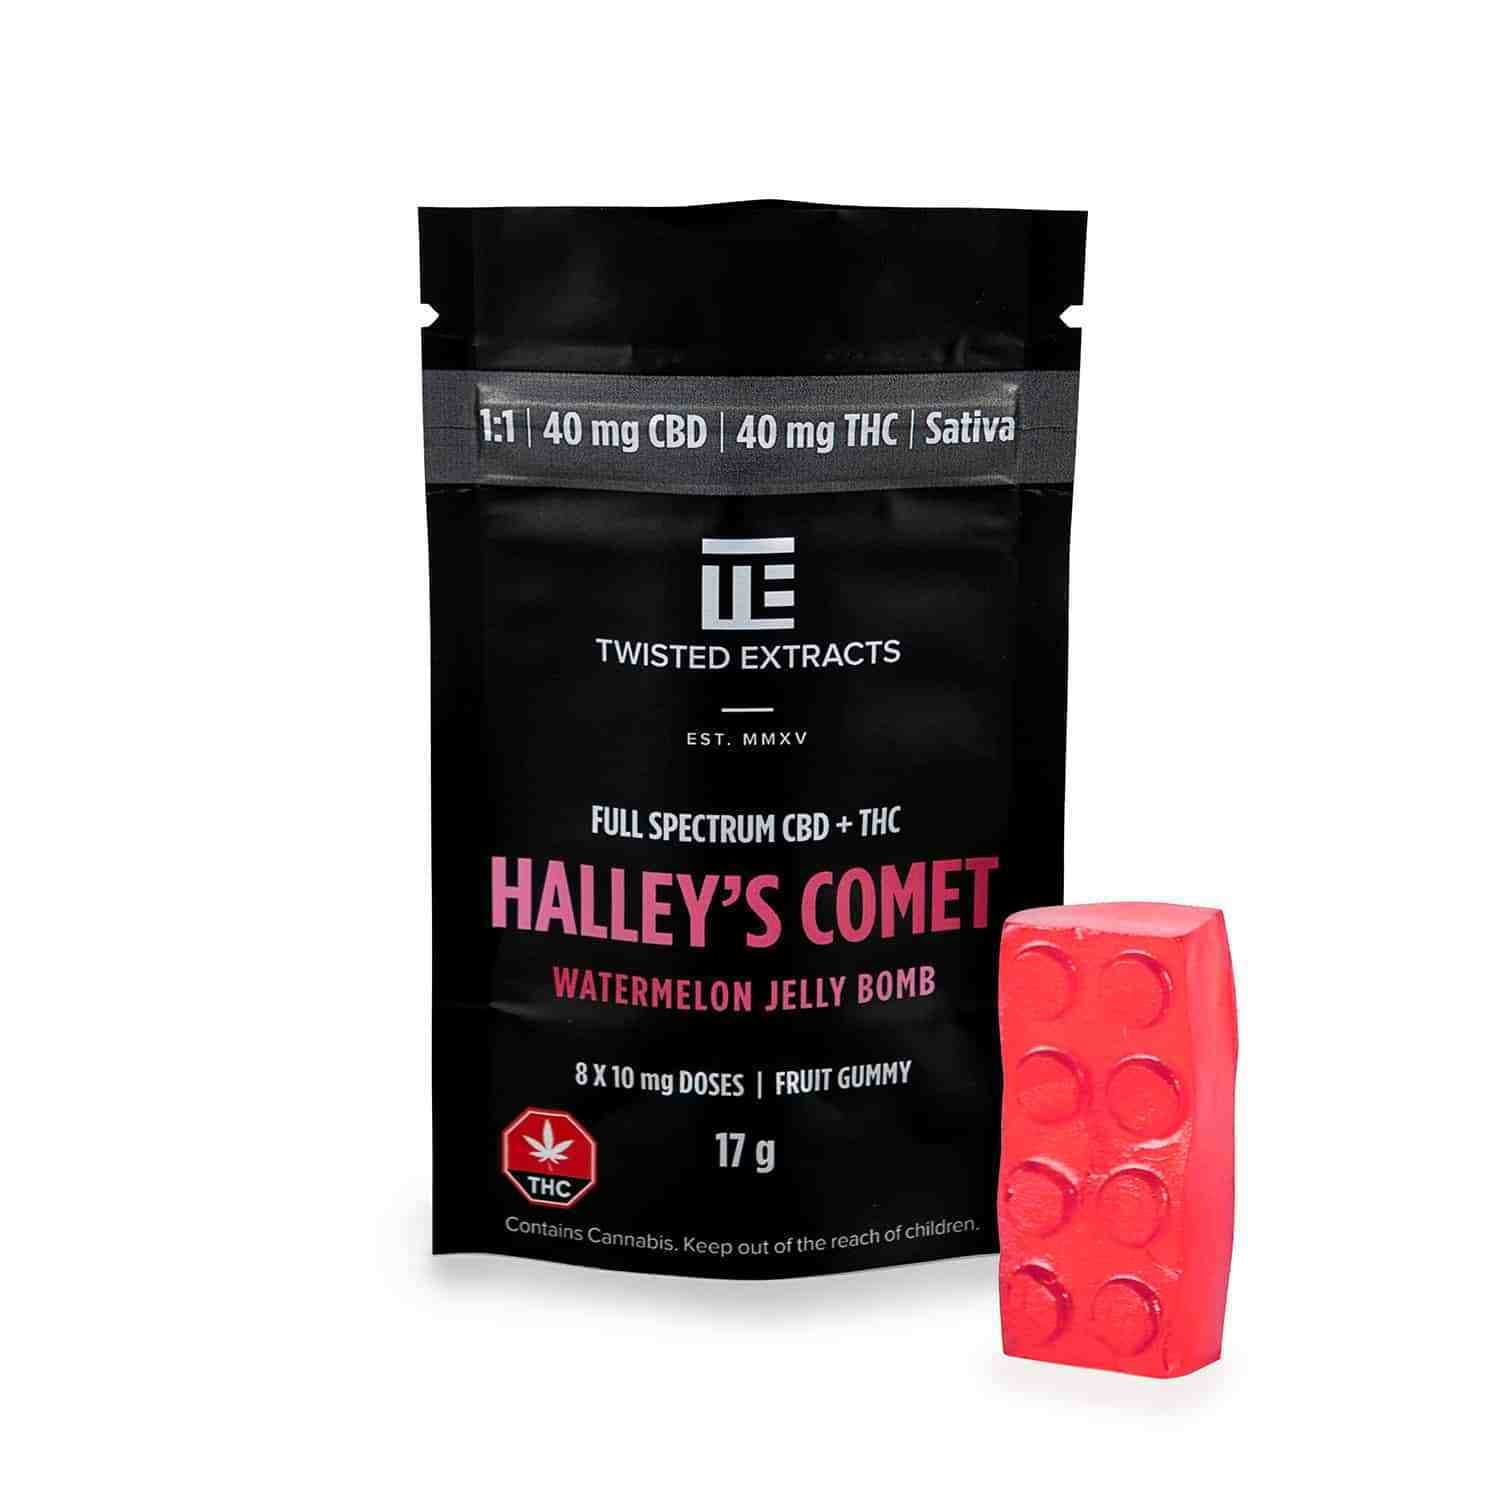 edible-halleys-comet-watermelon-jelly-bomb-11